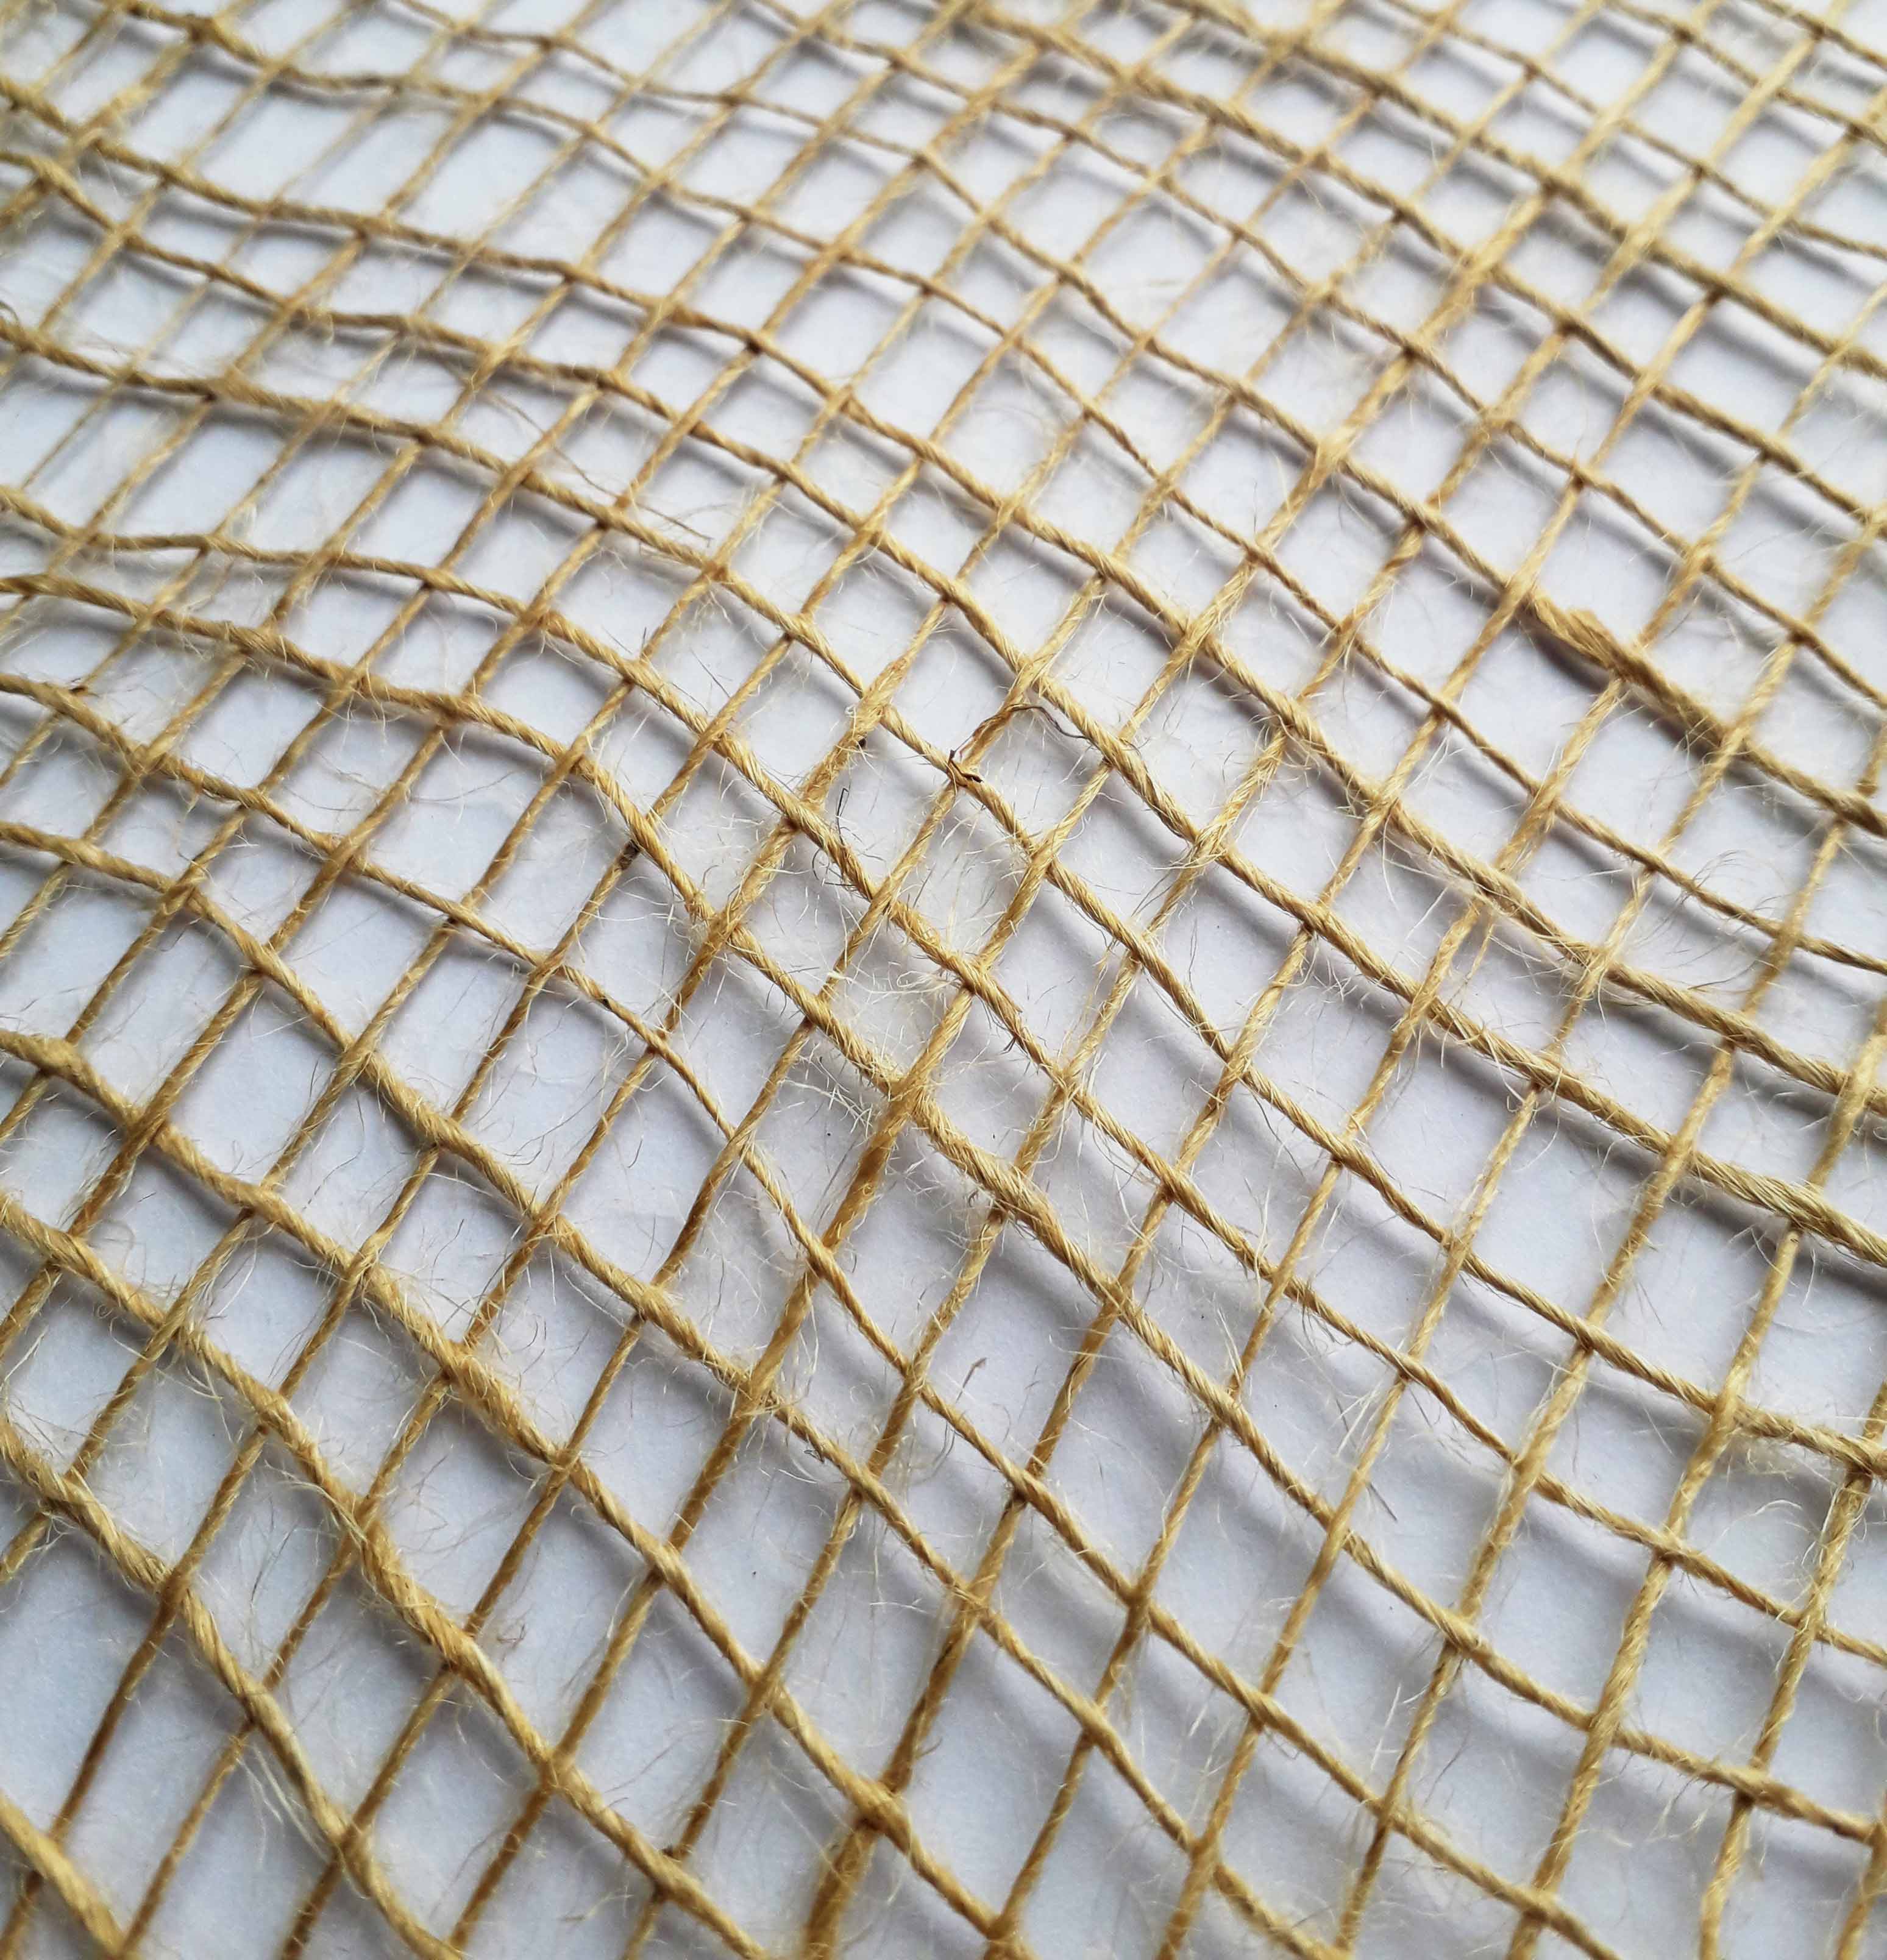 Metallic Gold Russian Netting Fabric